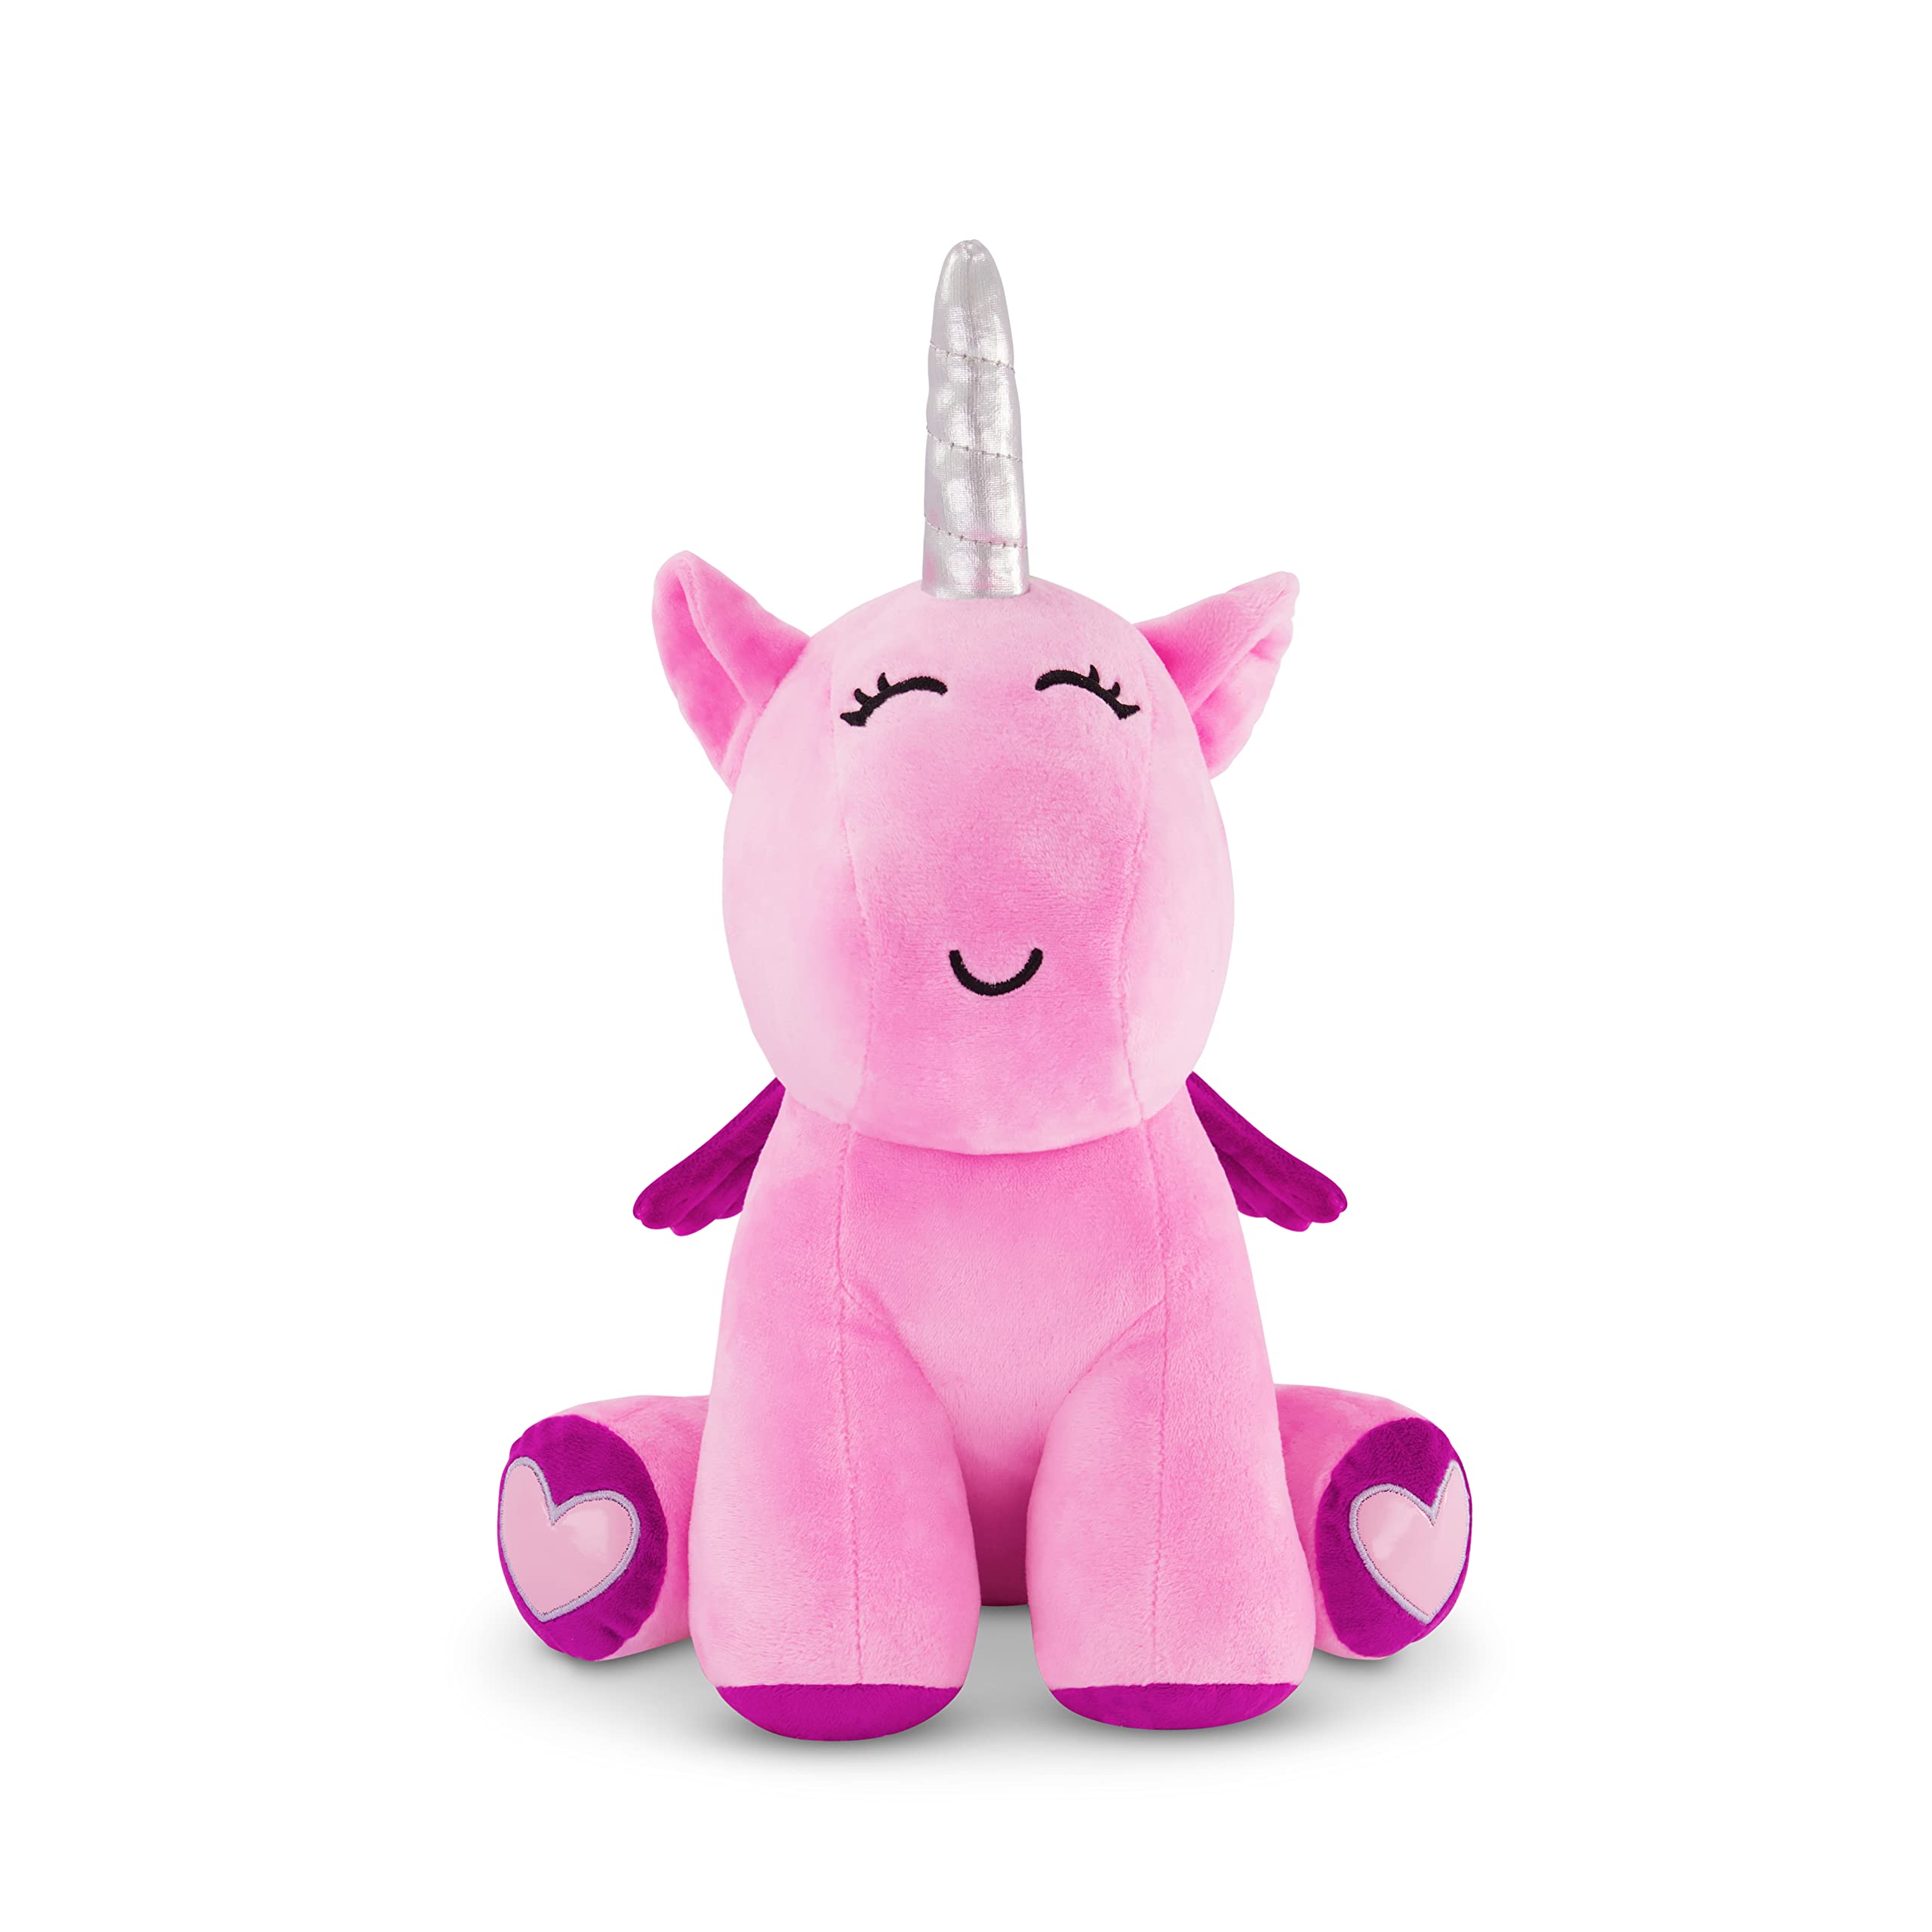 Mua InFLOATables Unicorn Stuffed Animals for Girls, Pink Stuffed Unicorn  Plush Toy, Giant Unicorn Stuffed Animal w/ Rainbow Mane - Unicorn Toy w/  Customizable Birth Certificate 13 in (Pink) trên Amazon Mỹ